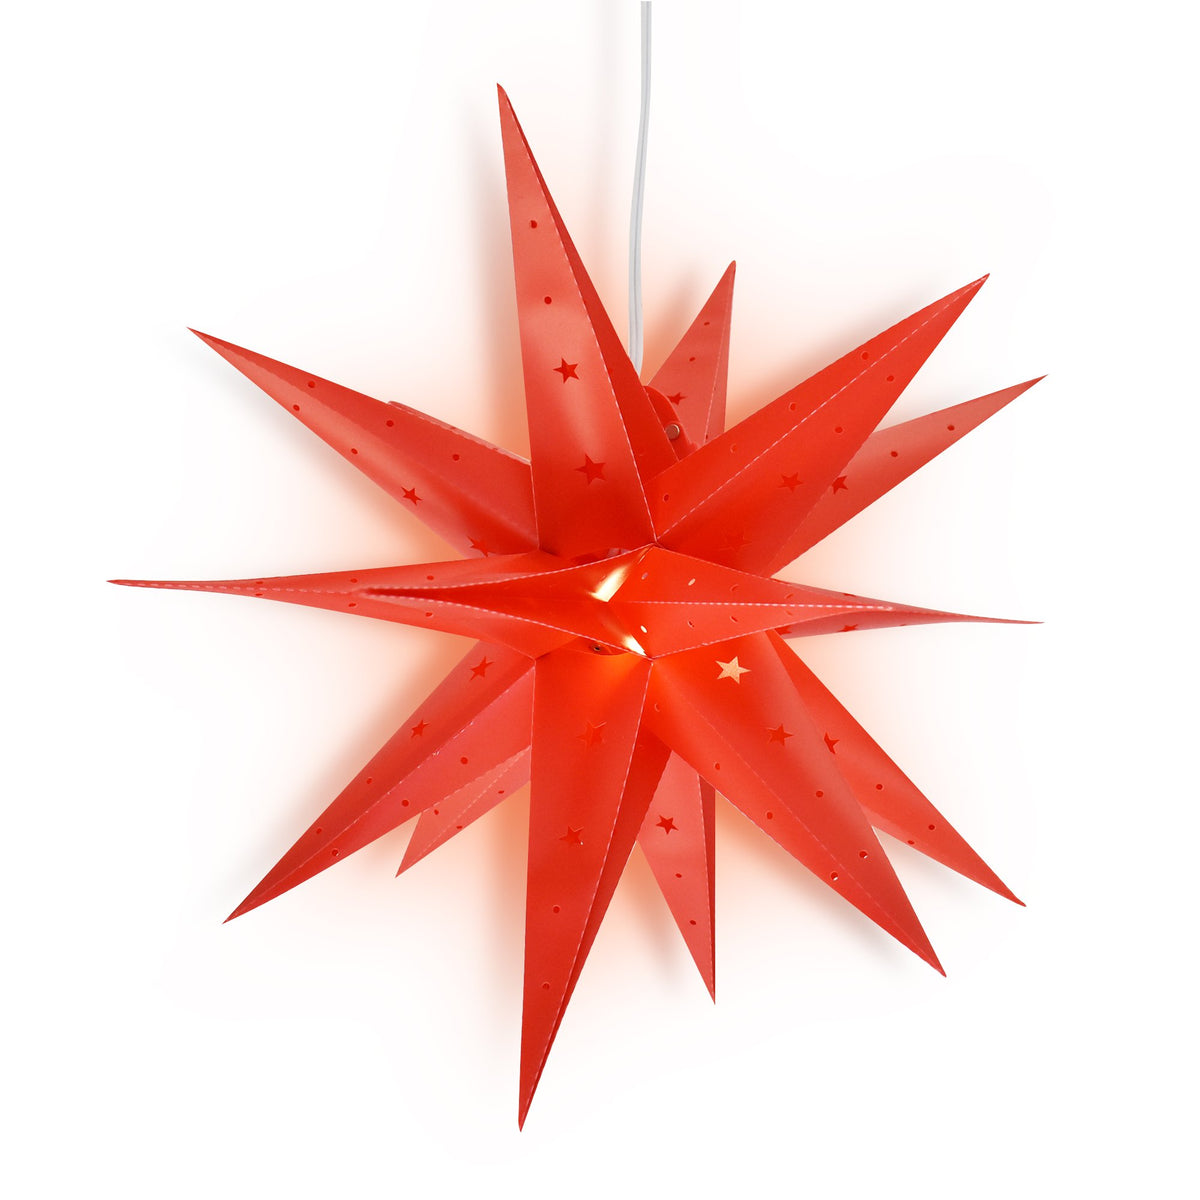 24&quot; Red Moravian Weatherproof Star Lantern Lamp, Multi-Point Hanging Decoration - PaperLanternStore.com - Paper Lanterns, Decor, Party Lights &amp; More